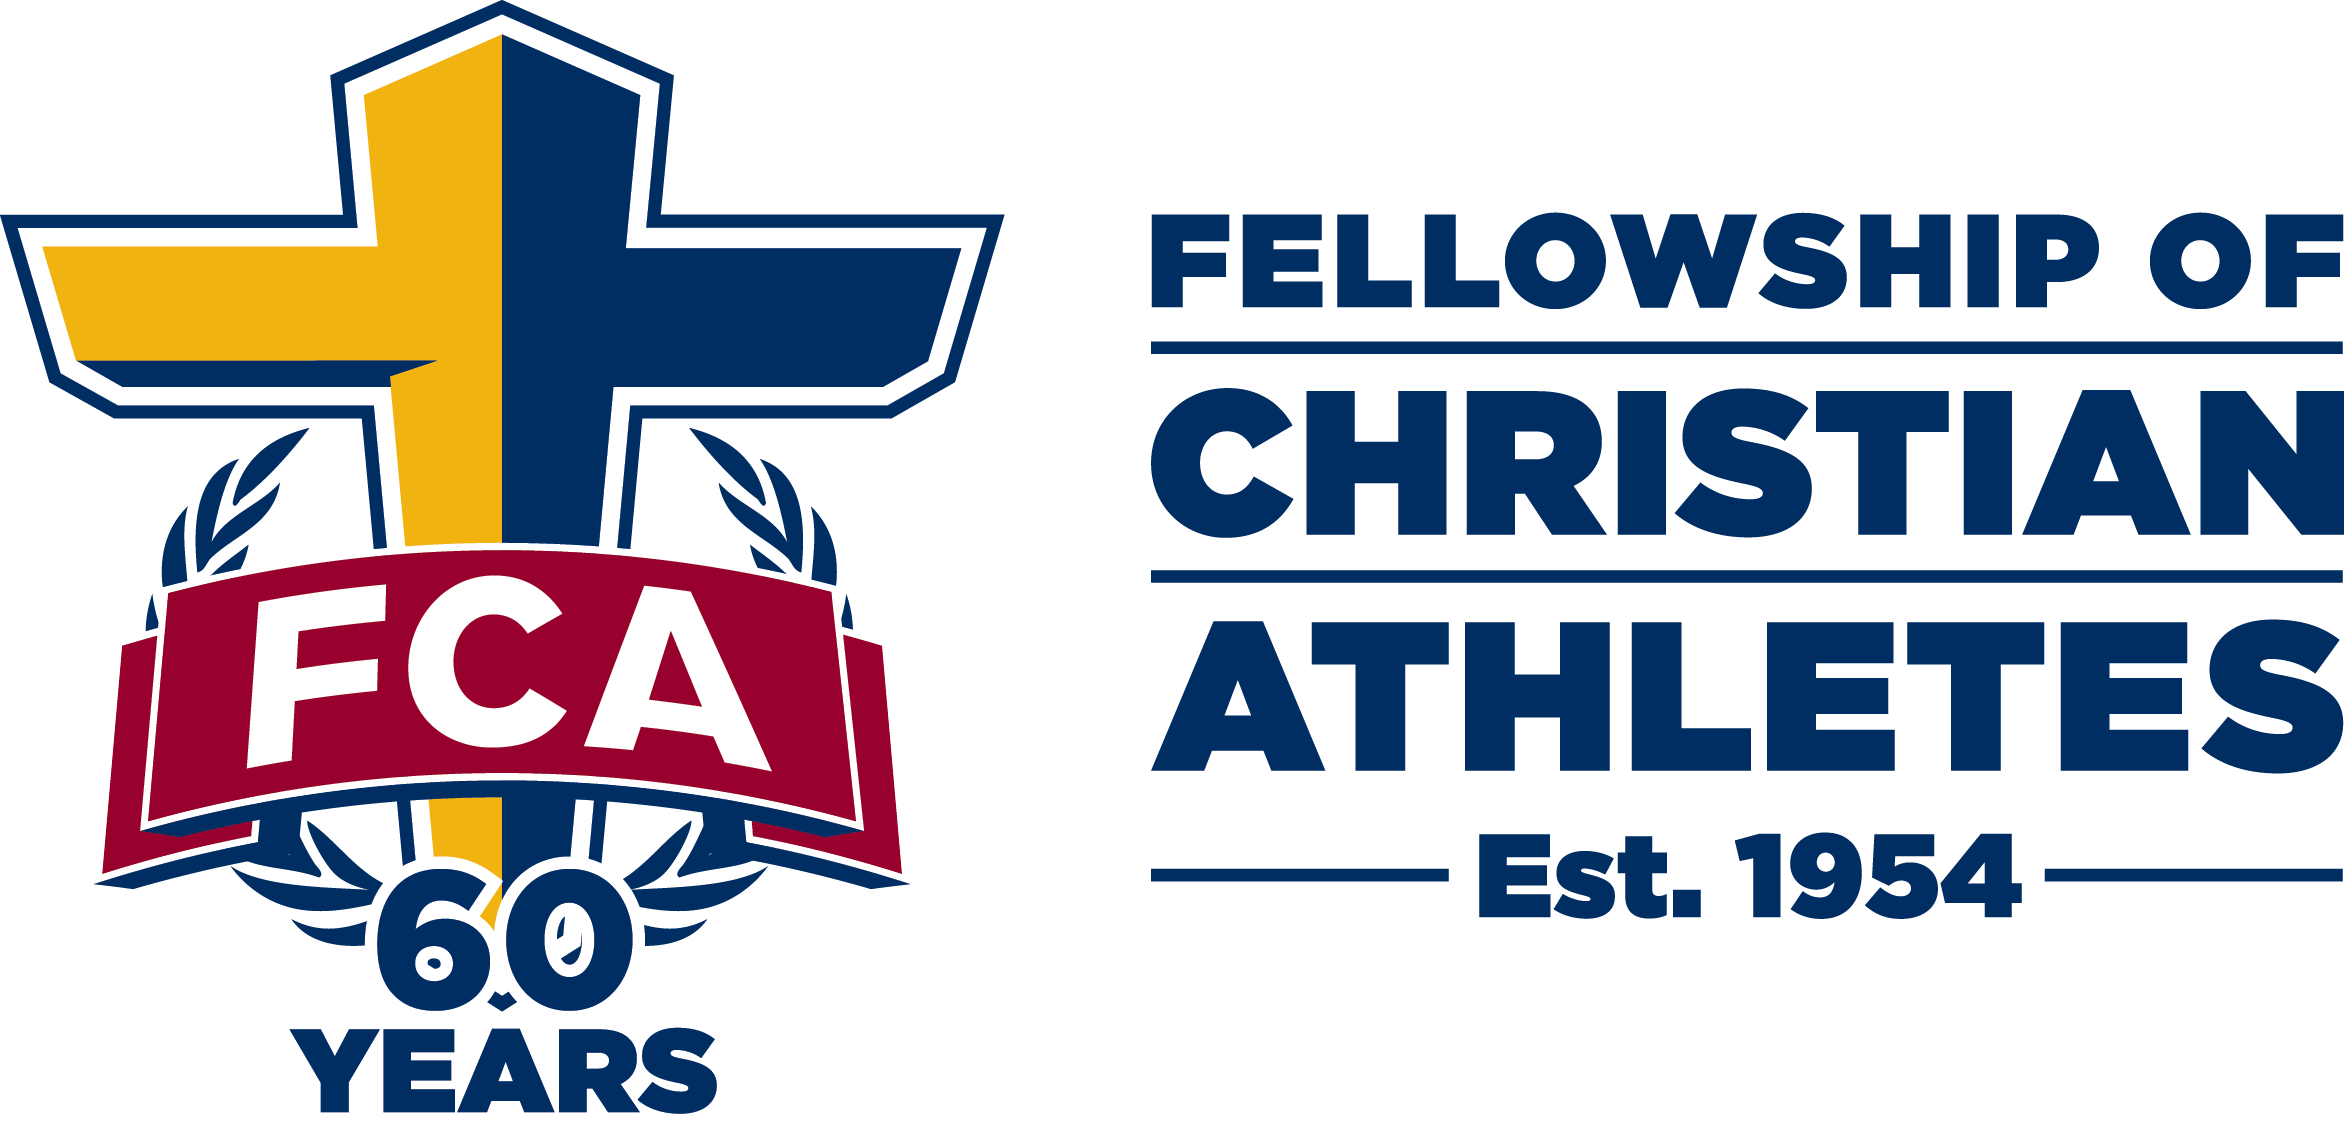 Fellowship of Christian Athletes Logo - FCA Updates Logos. Fellowship of Christian Athletes